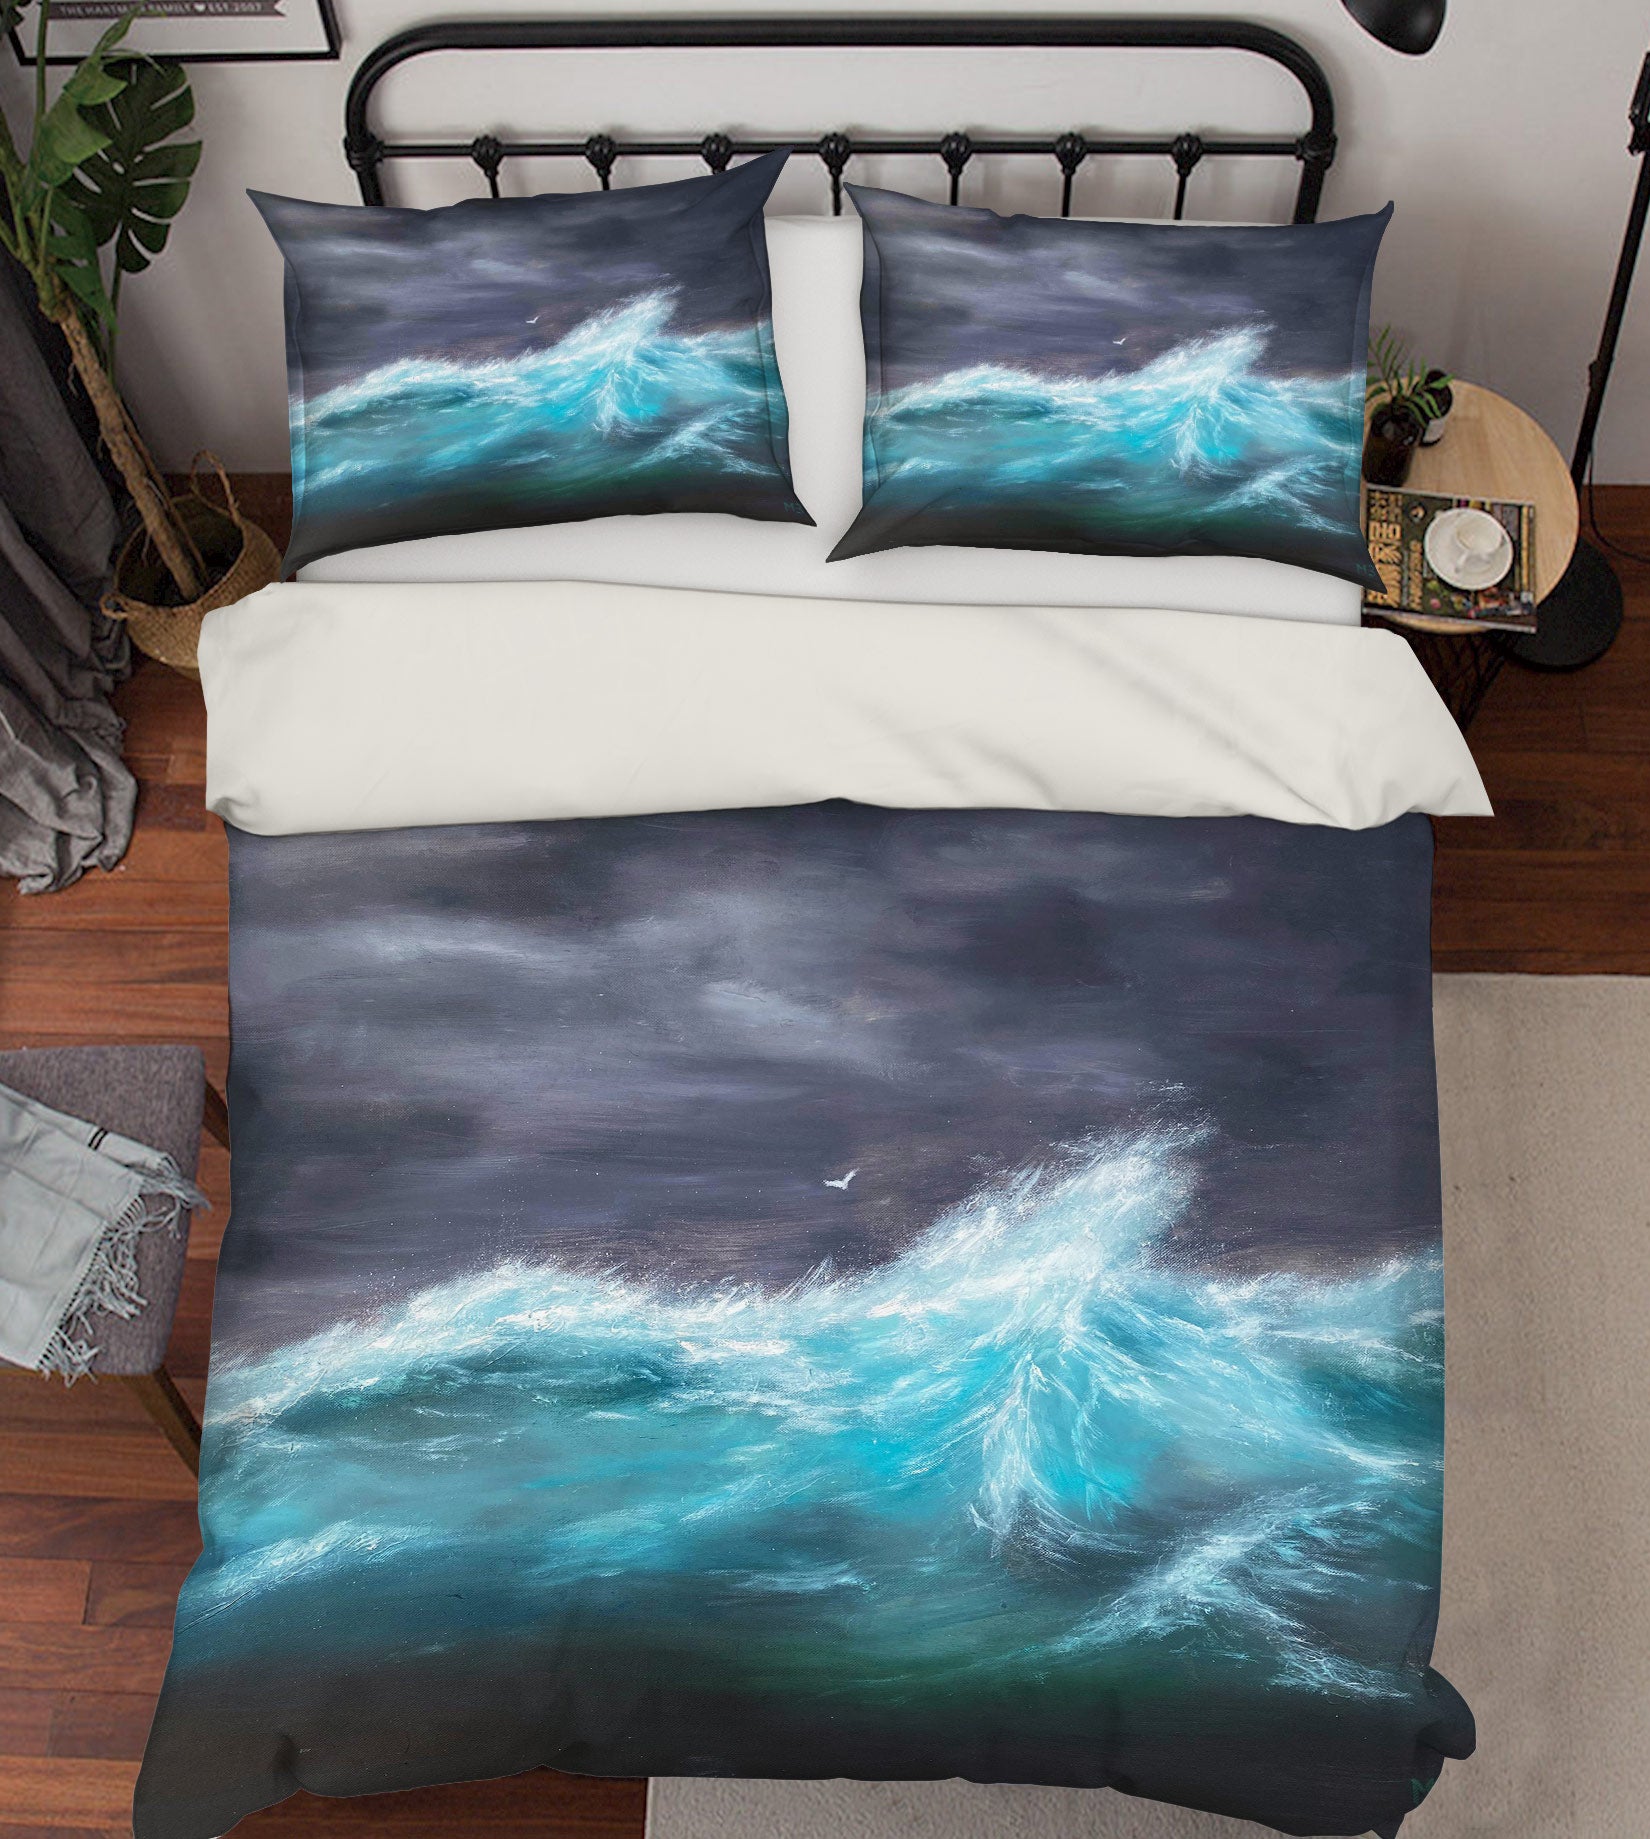 3D Blue Waves 9787 Marina Zotova Bedding Bed Pillowcases Quilt